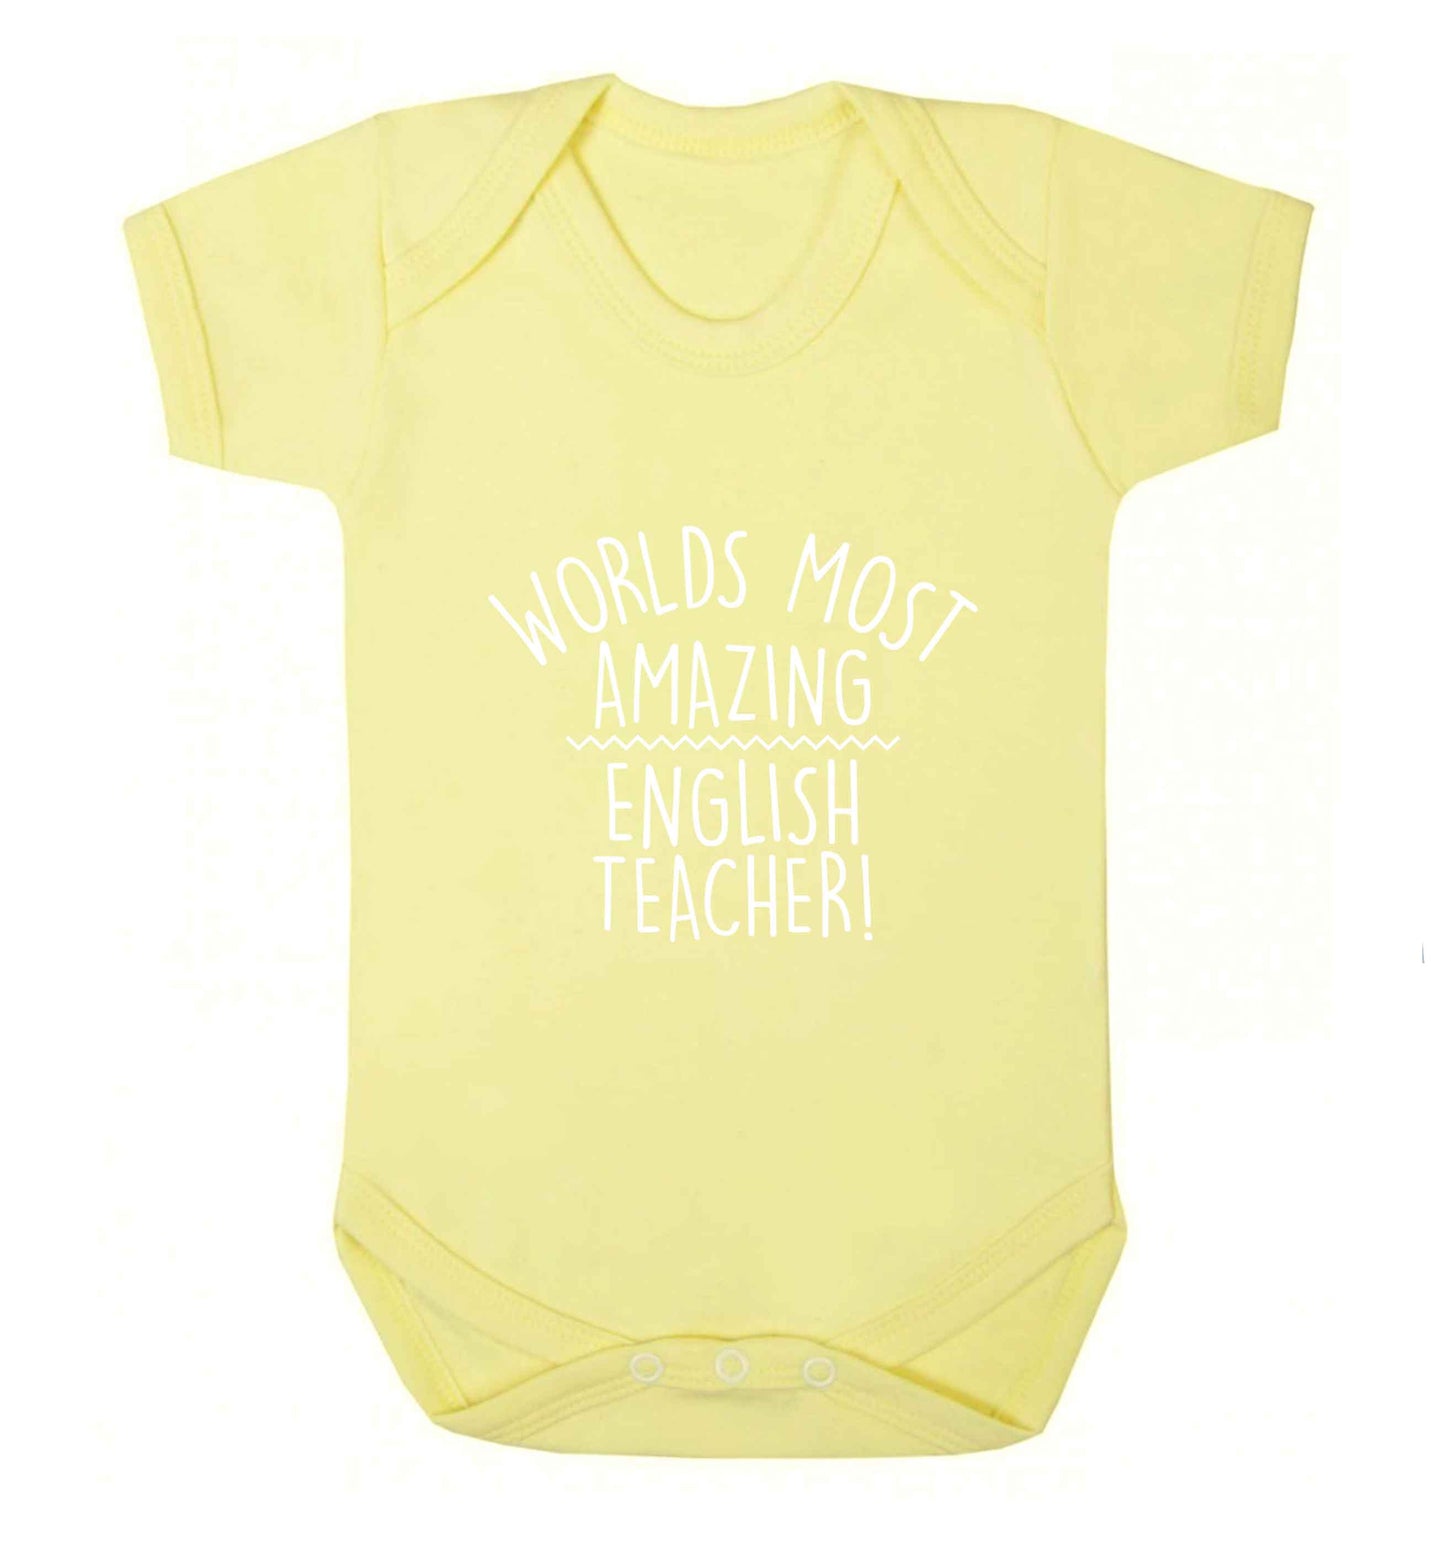 Worlds most amazing English teacher baby vest pale yellow 18-24 months